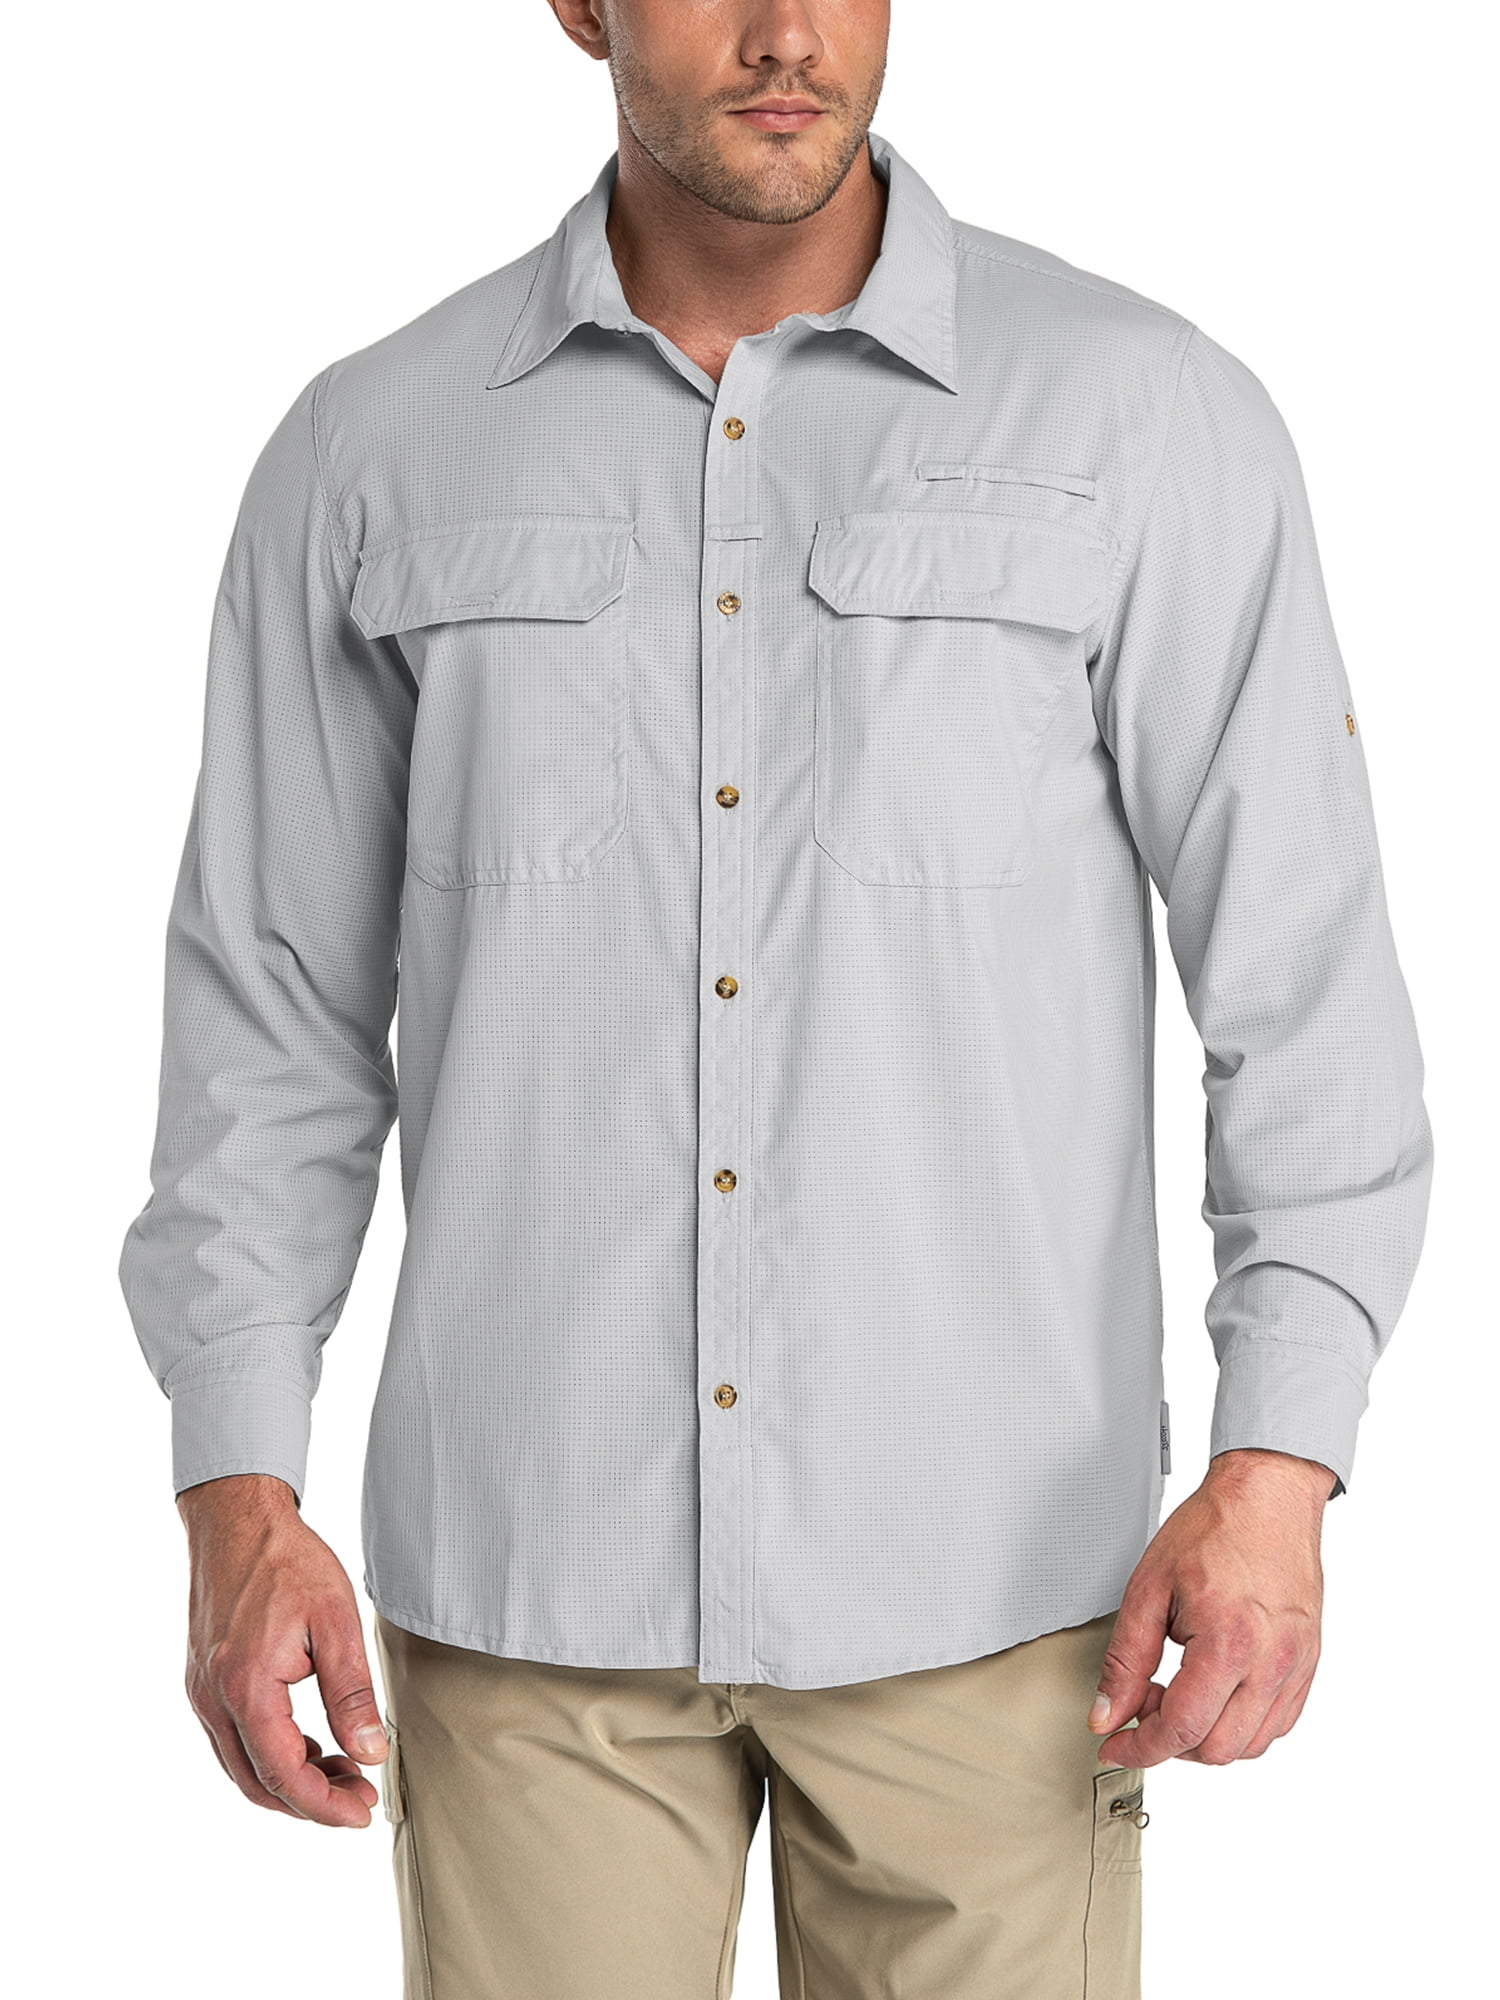 33,000ft Men's Long Sleeve Sun Protection Shirt UPF 52+ UV Quick Dry  Cooling Fishing Shirts for Travel Camping Hiking Khaki Large 